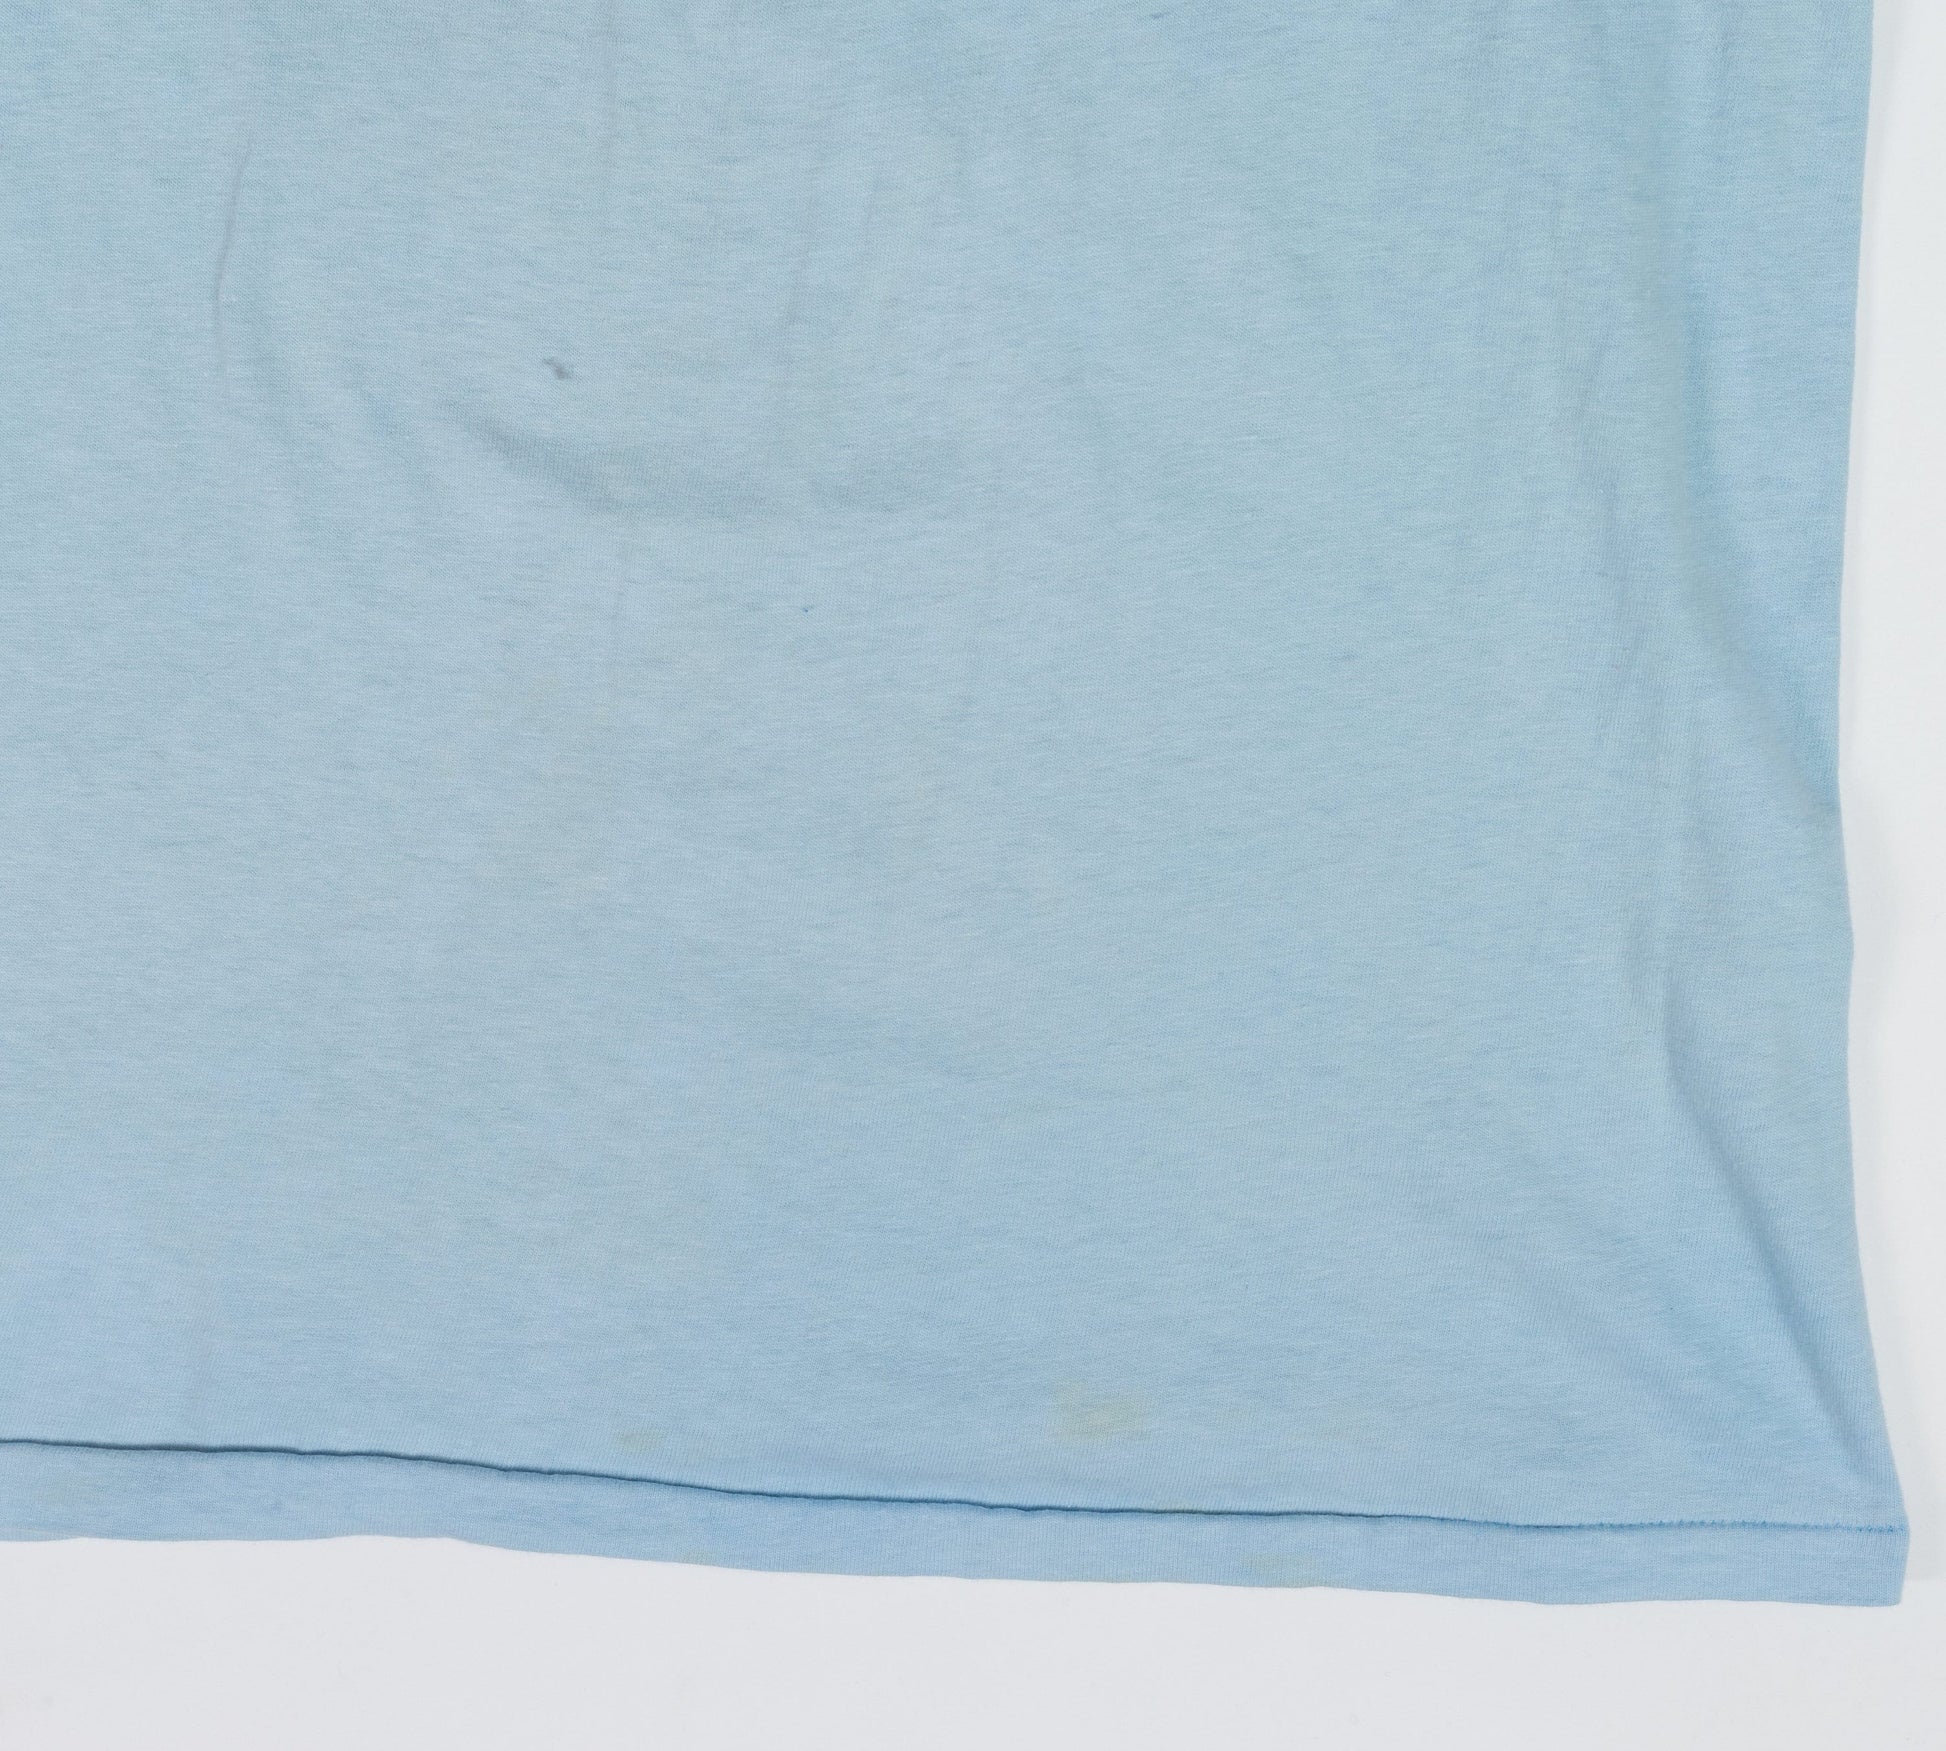 80s Colorado Alpine Graphic T Shirt - Men's Small, Women's Medium 